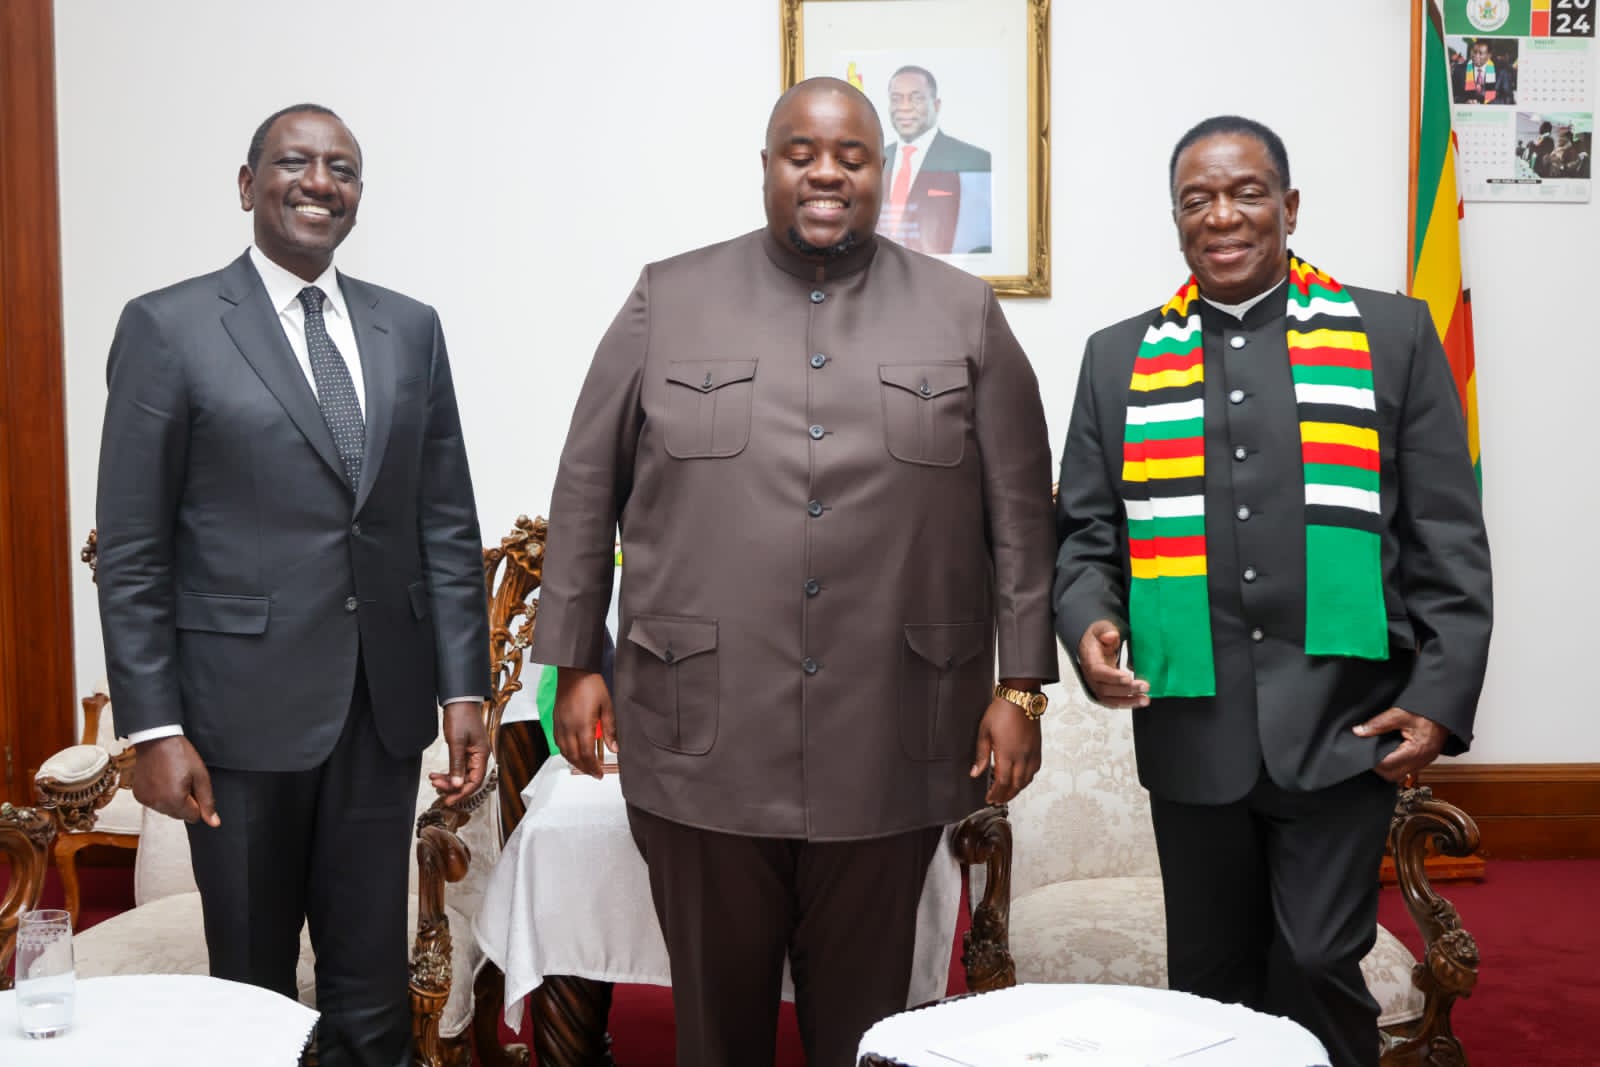 Kenyan President’s Photo with Zimbabwean Figure Raises Concerns